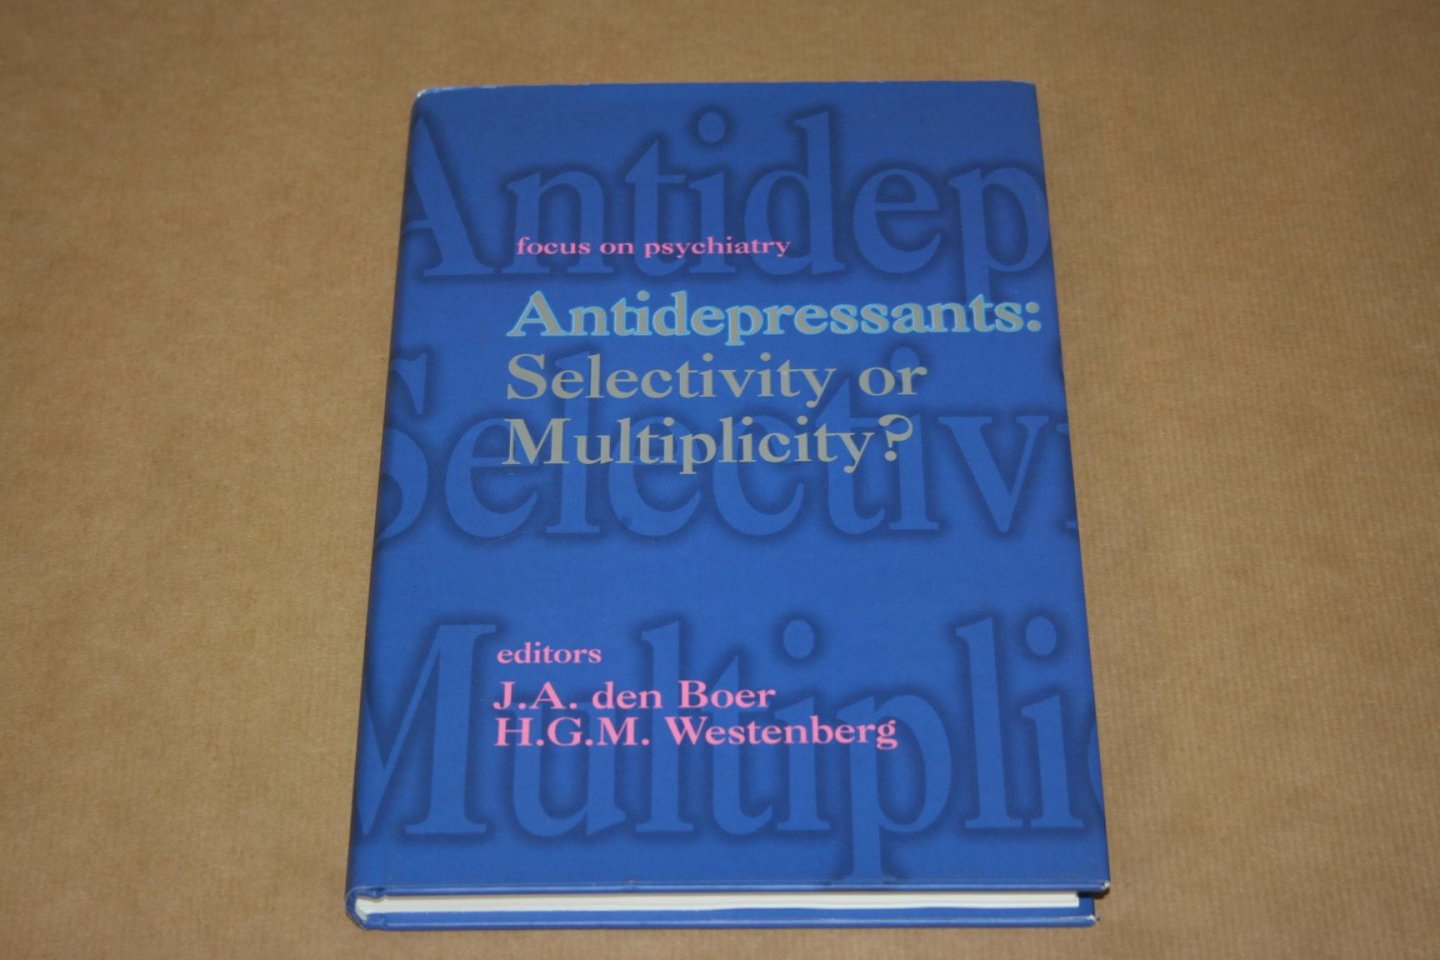 den Boer & Westenberg - Antidepressants: Selectivity or Multiplicity?  (Focus on psychiatry)